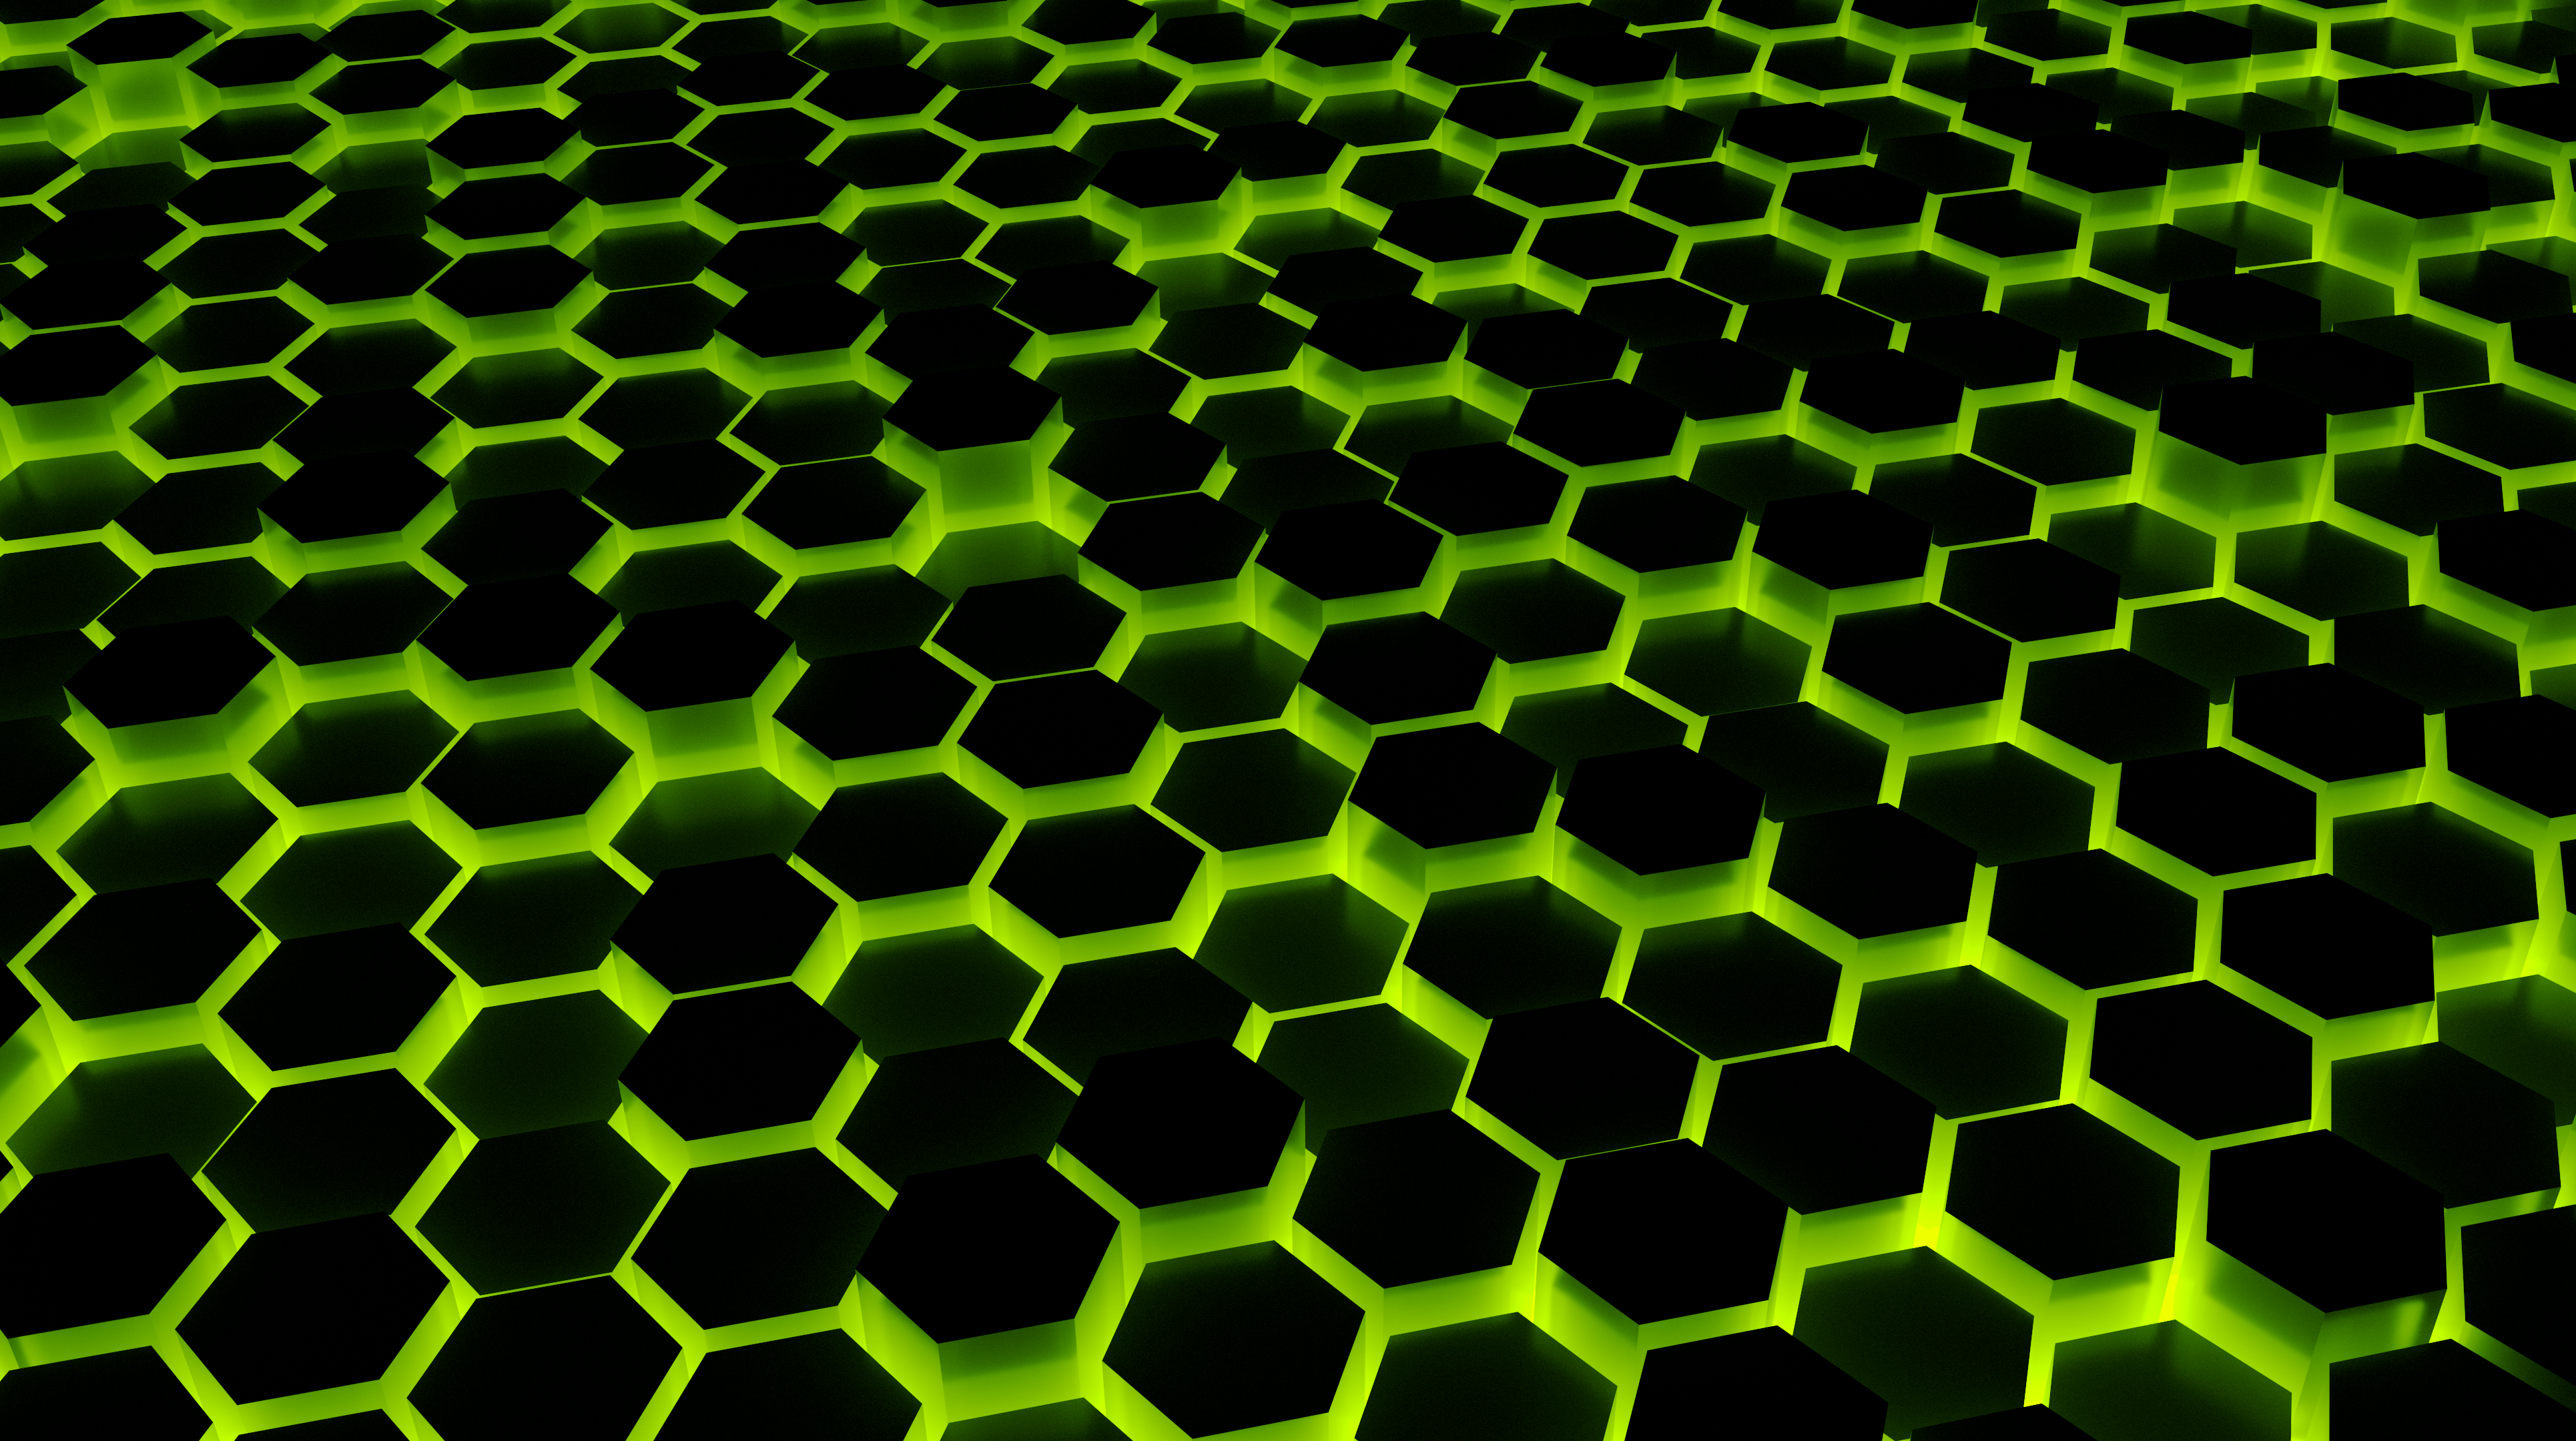 Green Hexagon Wallpaper 4k By Themusicfox On Deviantart HD Wallpapers Download Free Images Wallpaper [wallpaper981.blogspot.com]